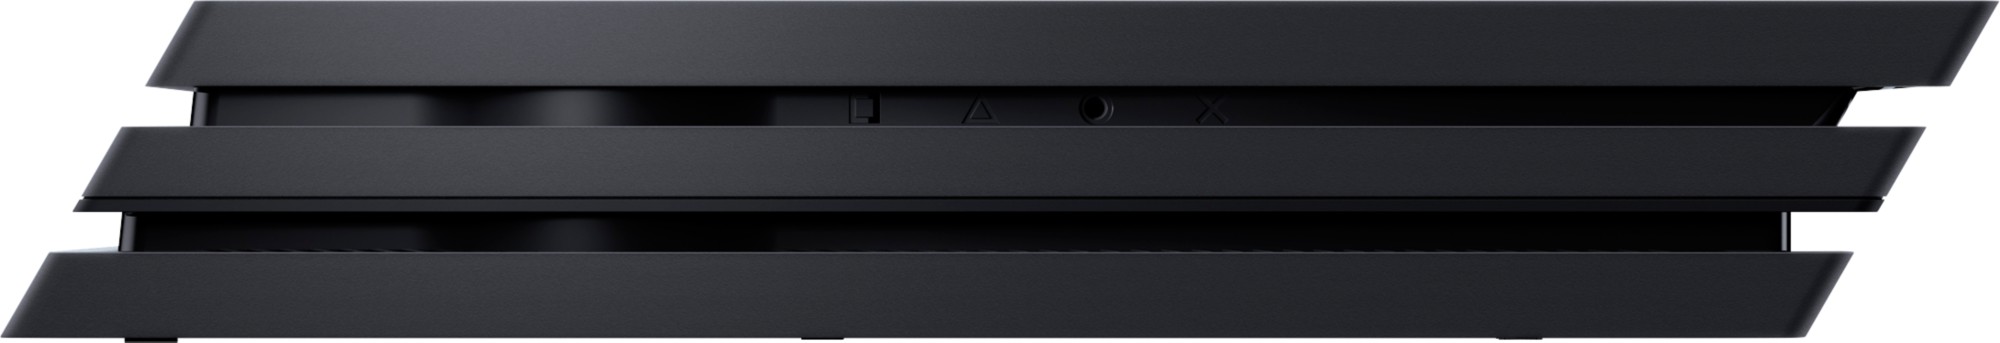 PlayStation 4 Pro (1TB, Jet Black) + 2 Controller